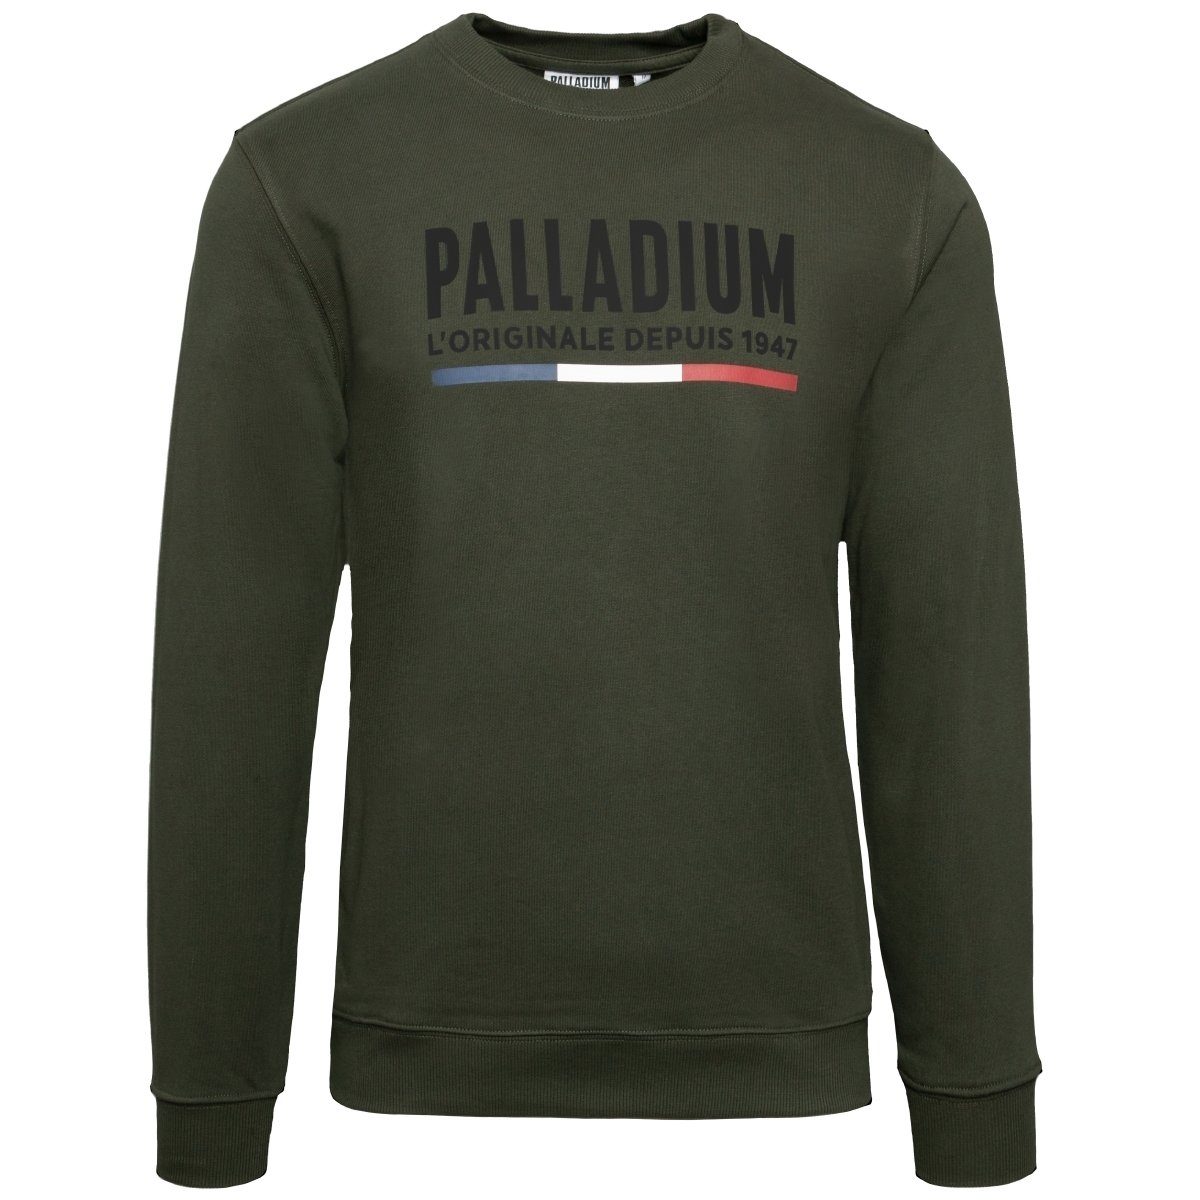 Palladium Sweatshirt Originale France Herren gruen | Sweatshirts